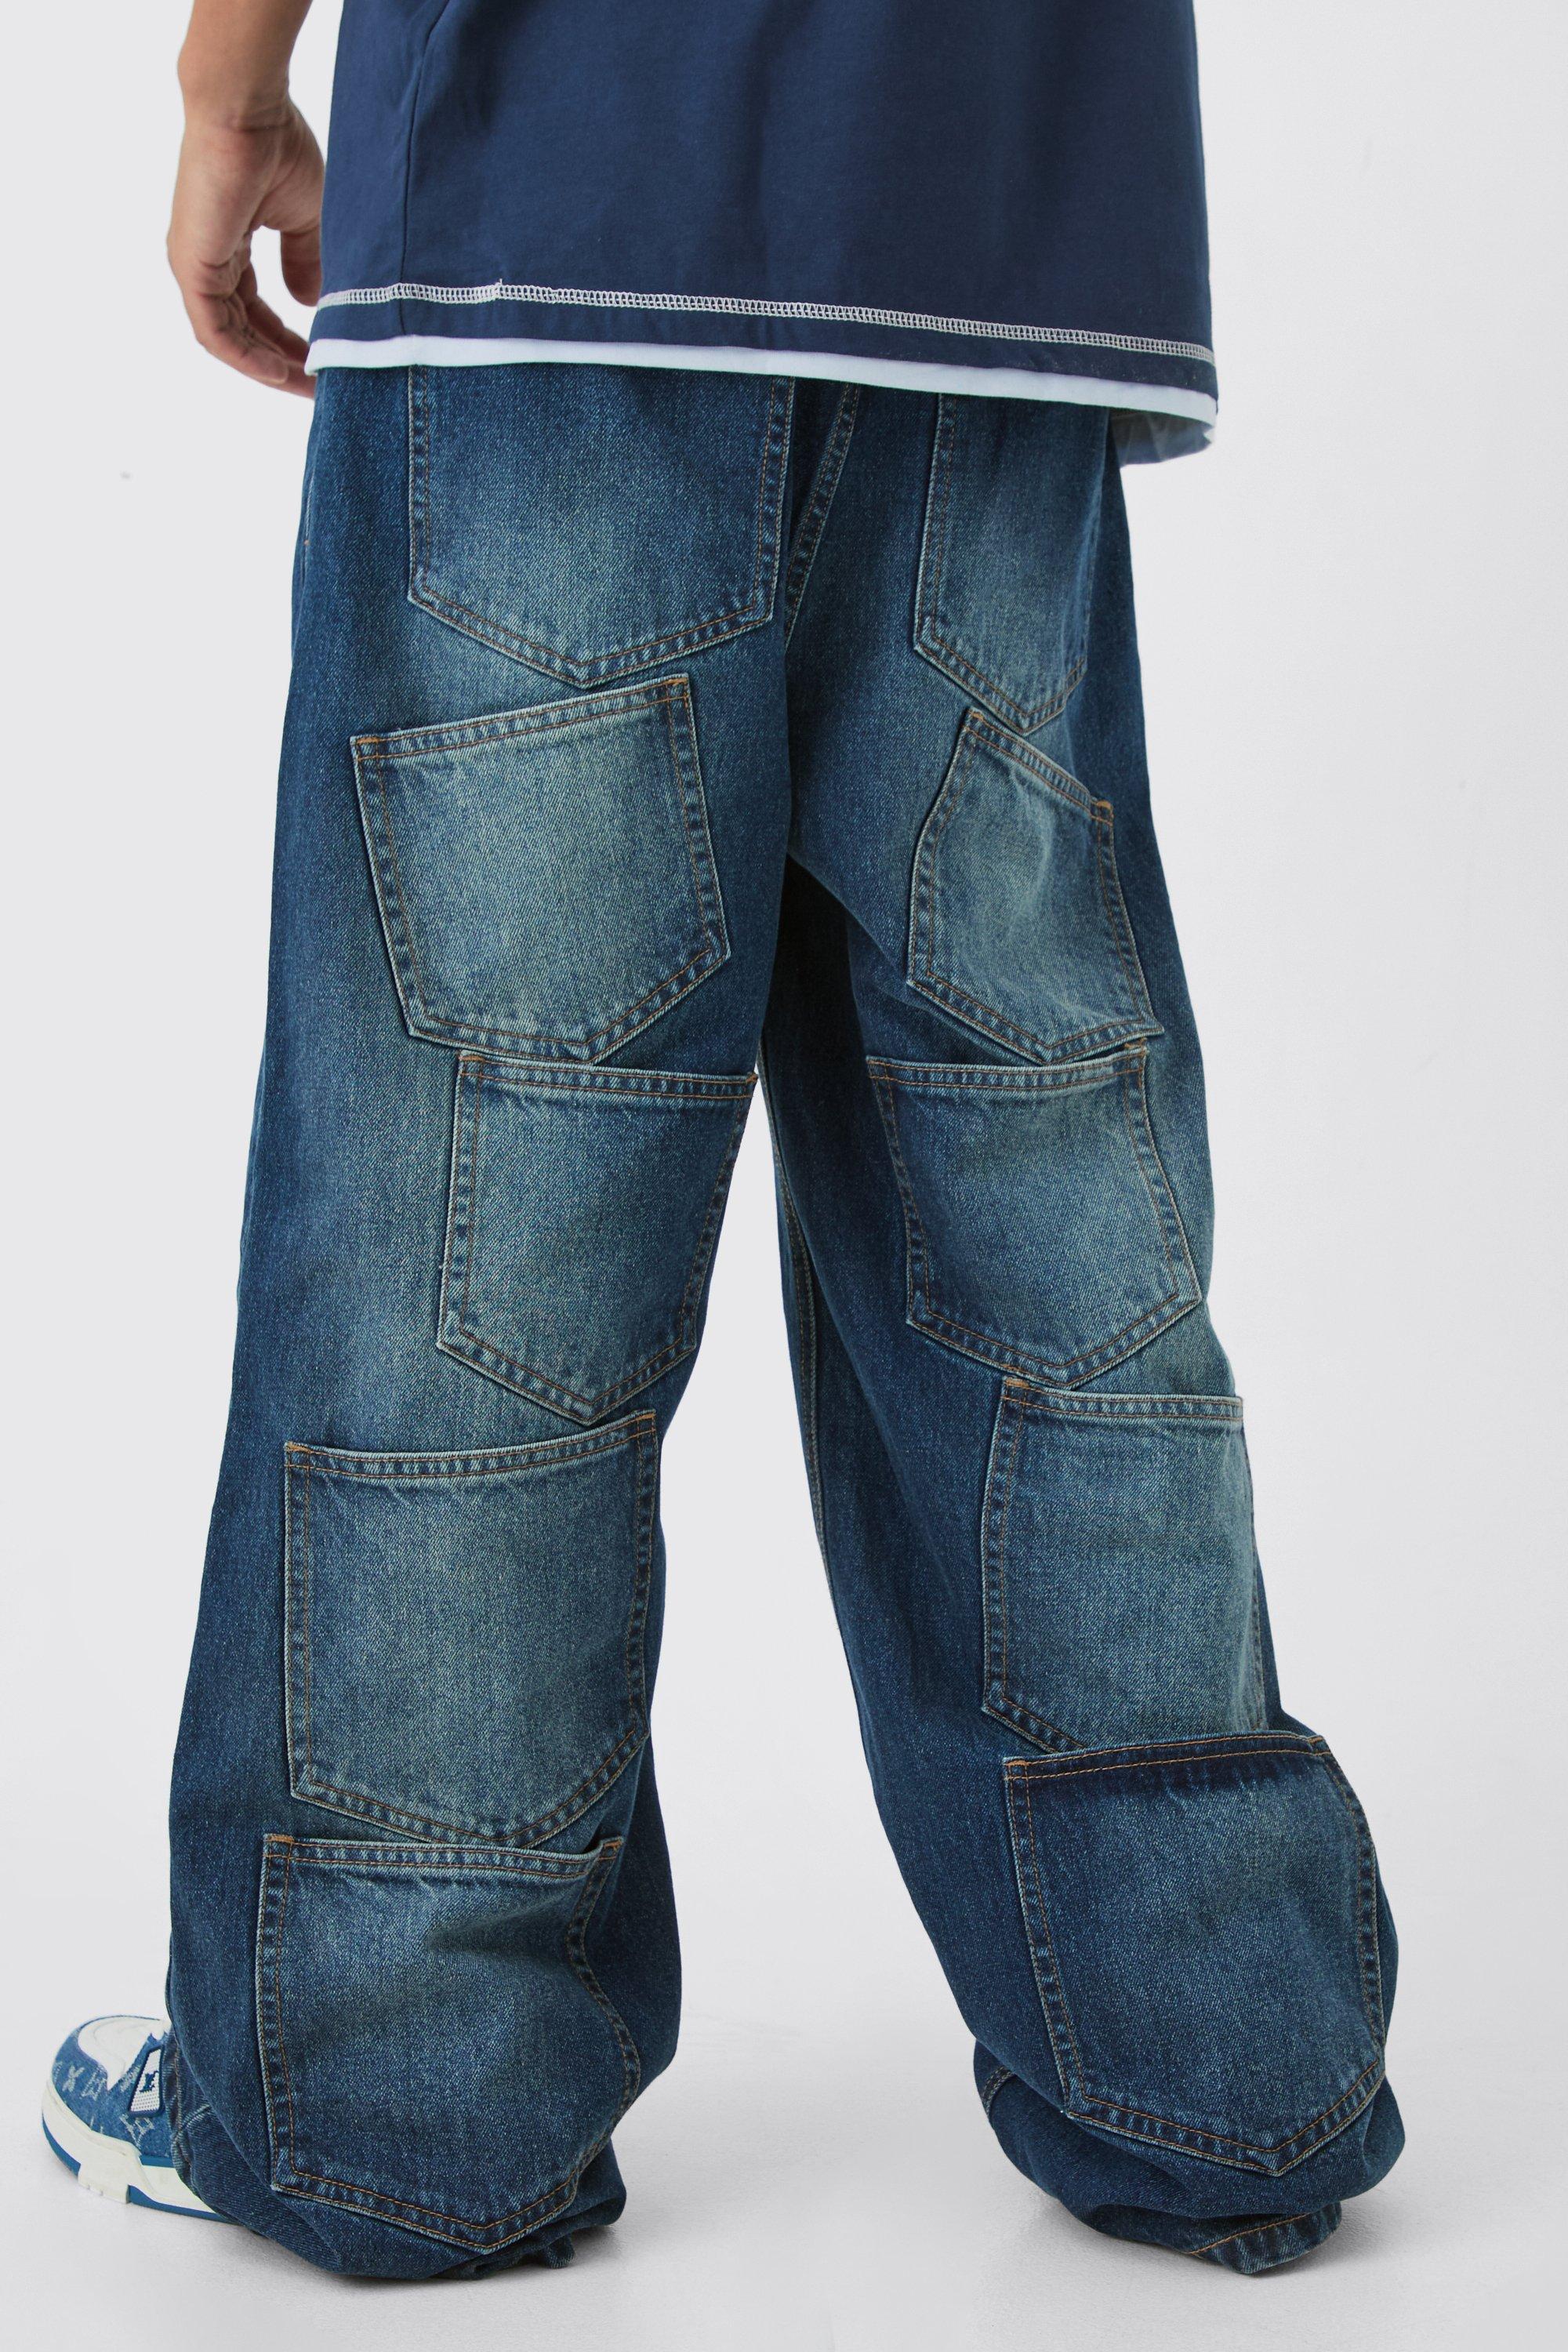 Image of Extreme Baggy Rigid Multi Pocket Denim Jean In Antique Wash, Grigio